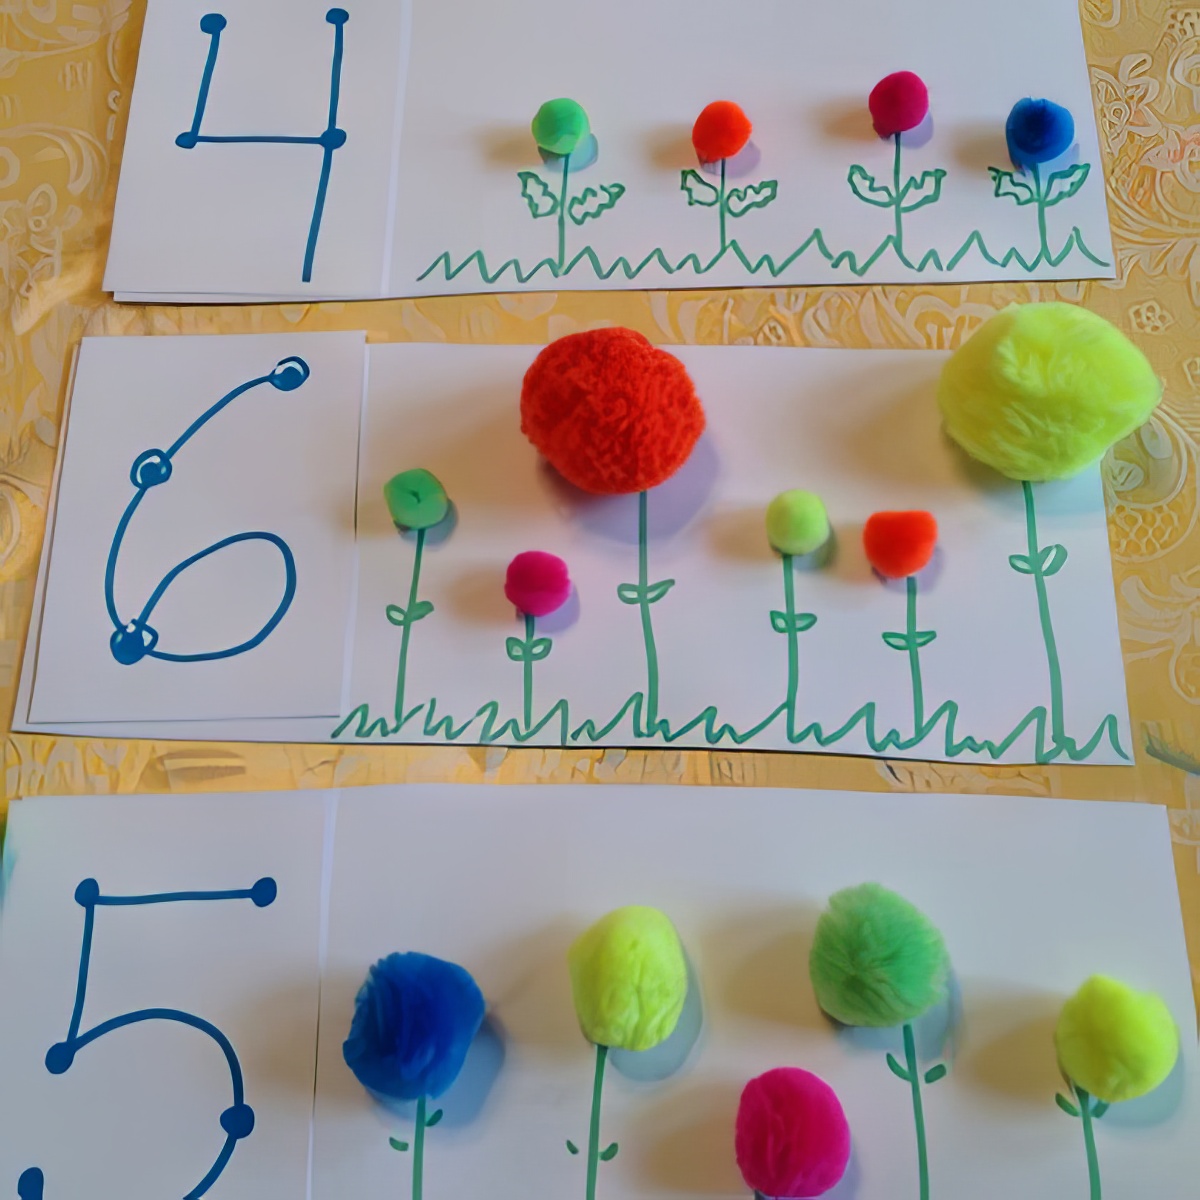 Paper garden and preschool math - counting game for preschoolers